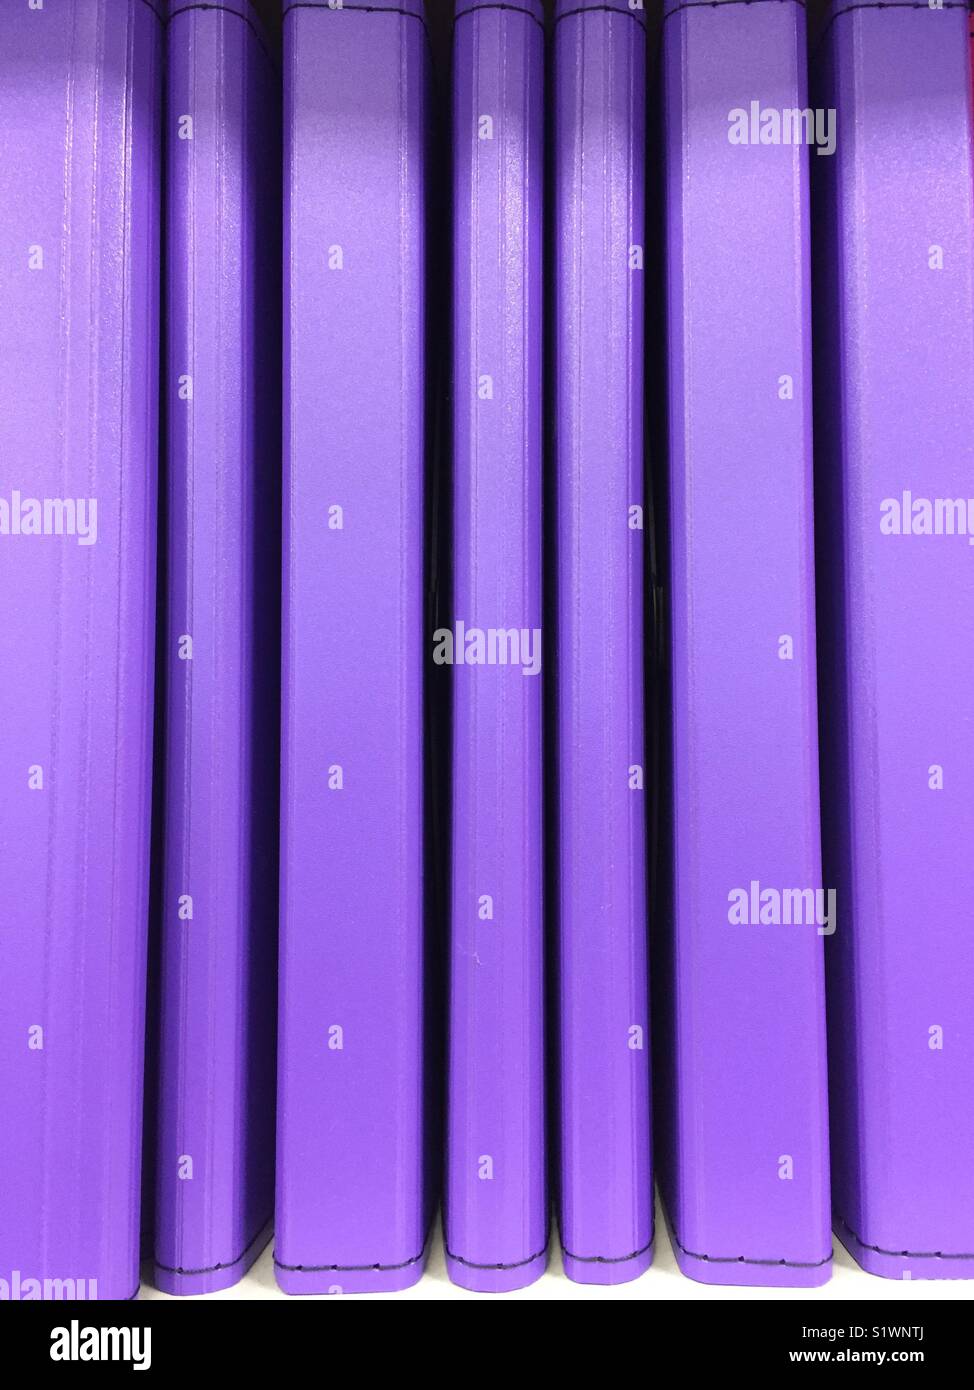 A row of purple books Stock Photo